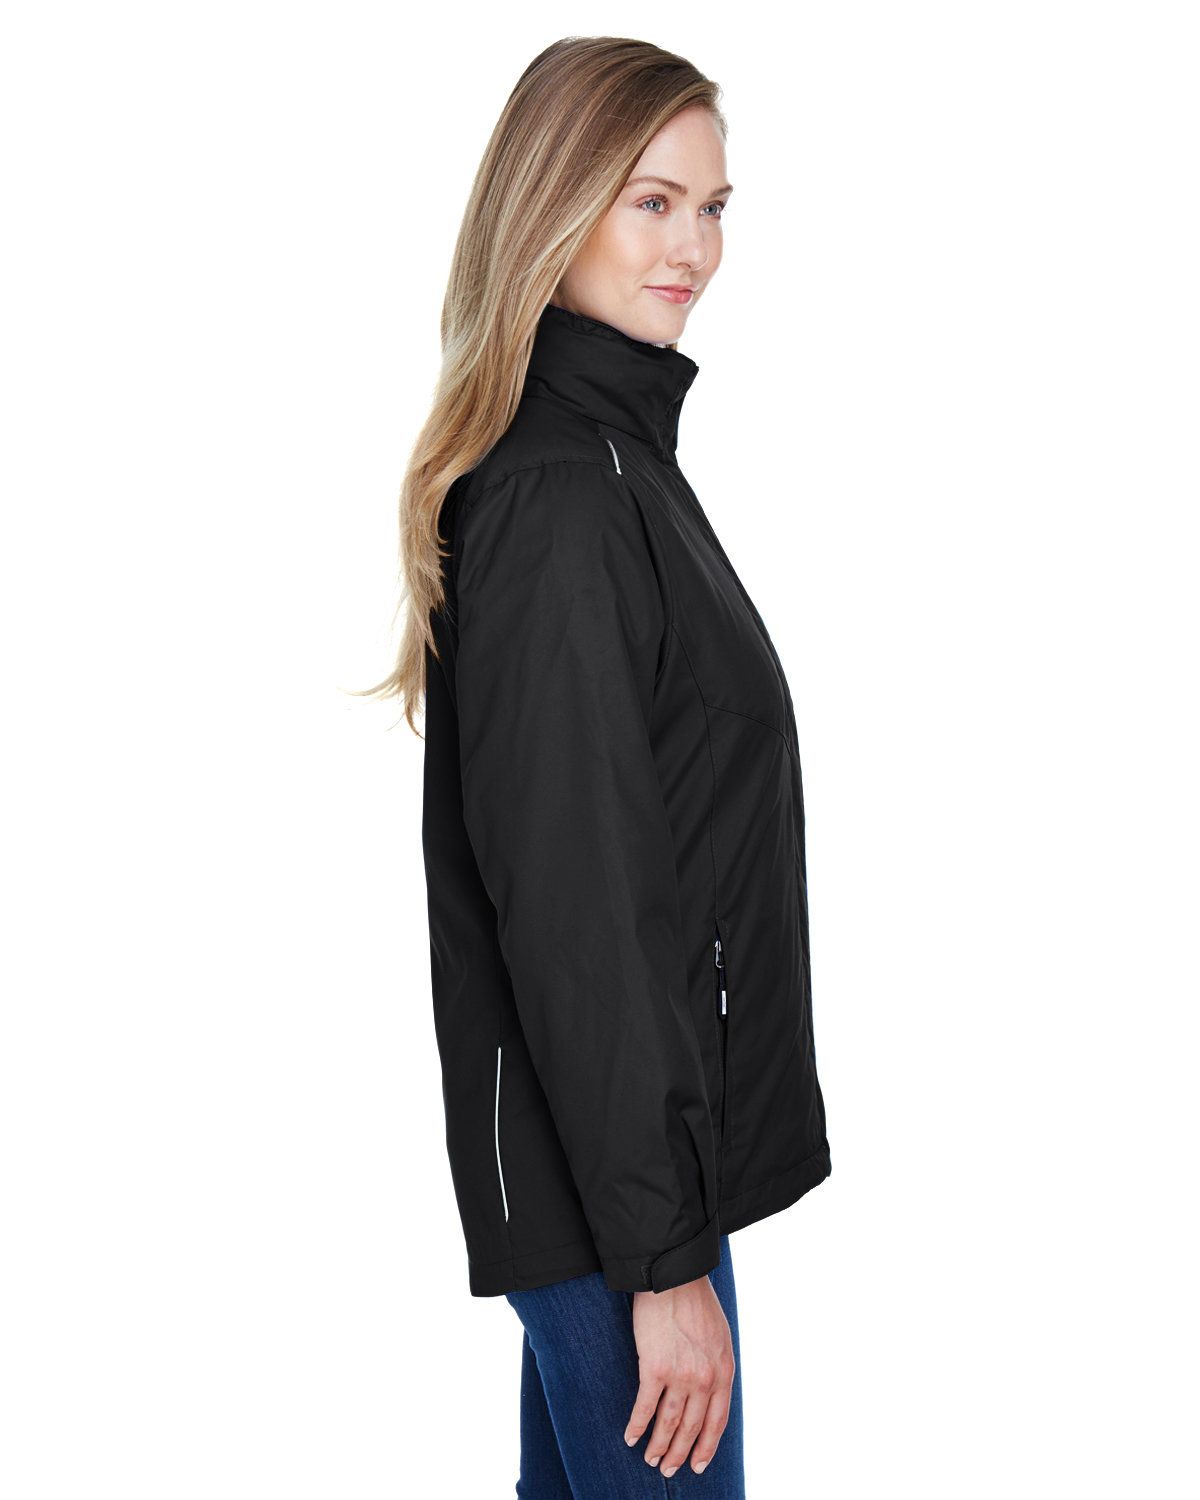 'Core365 78205 Women's Region 3 In 1 Jacket with Fleece Liner'